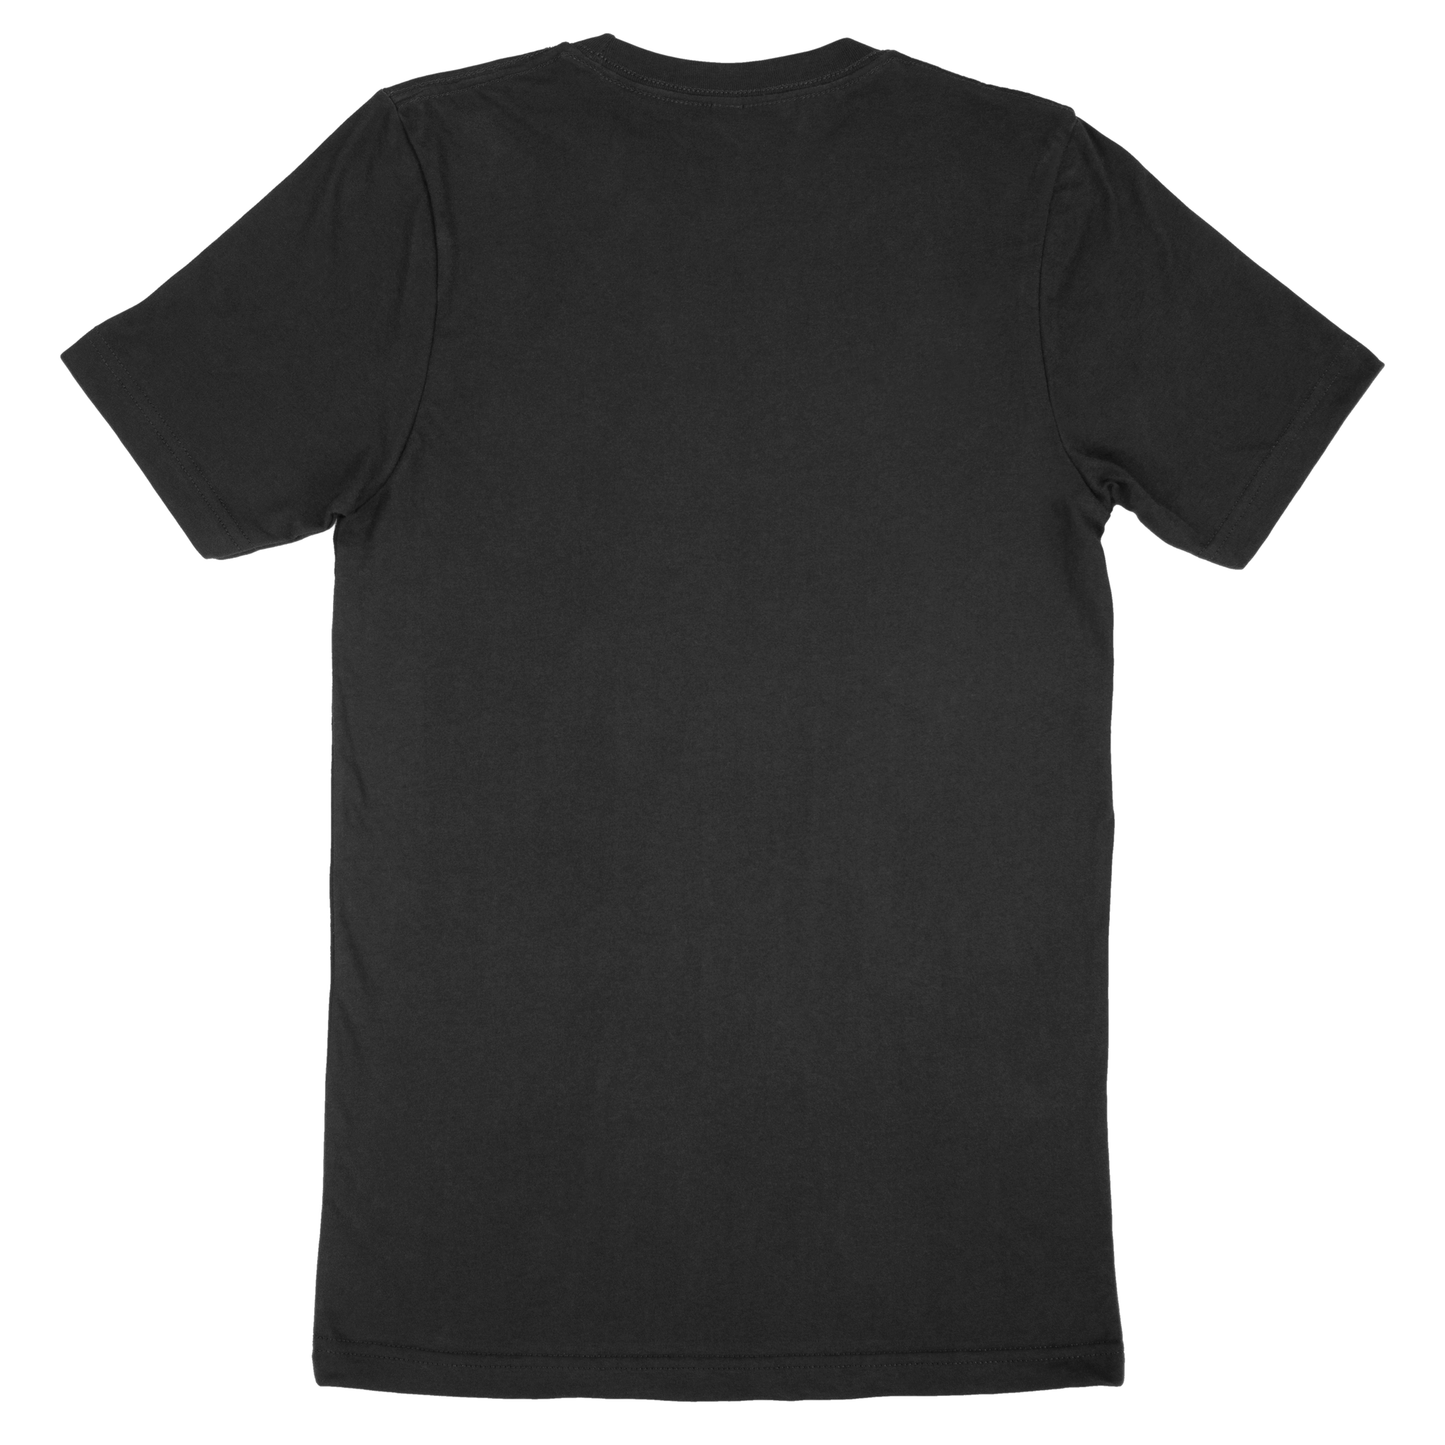 Mr. Vinyl T-Shirt - Black